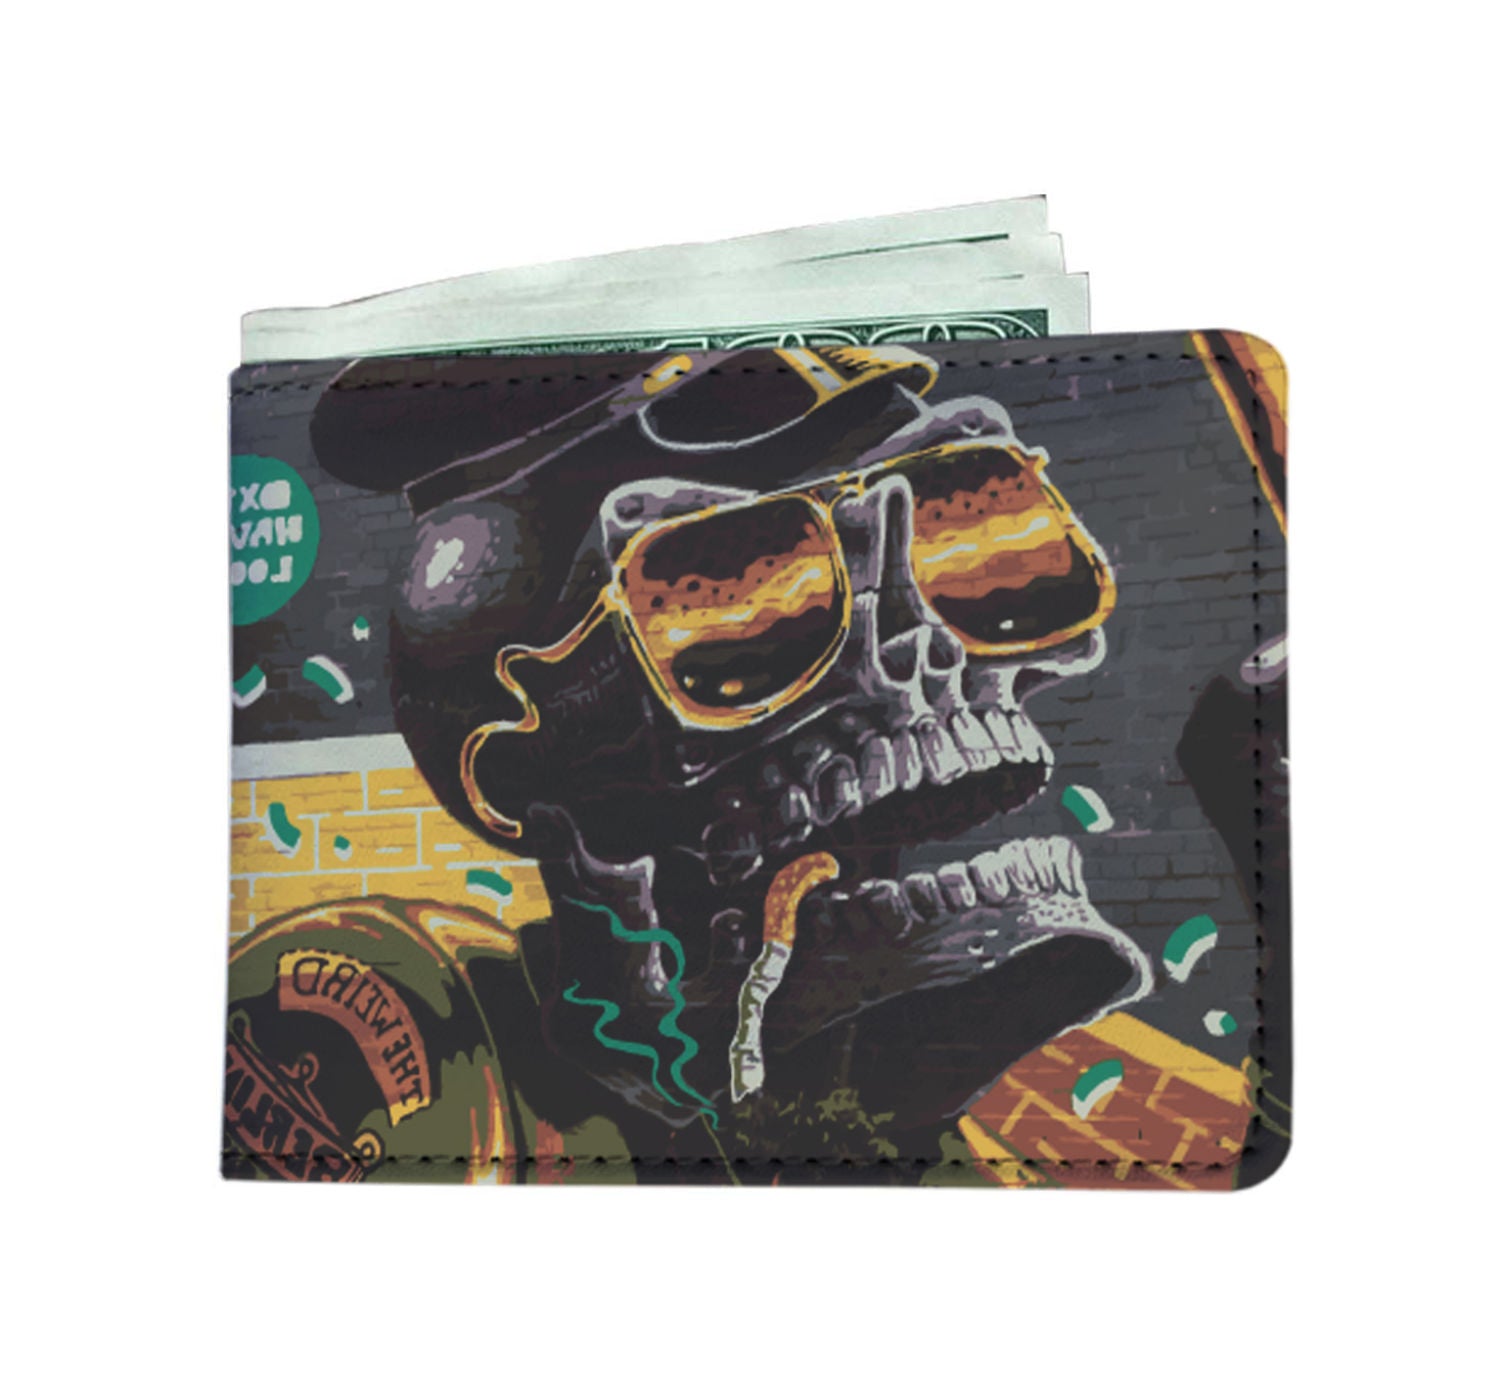 The Awesome graffiti Skull Man wallet